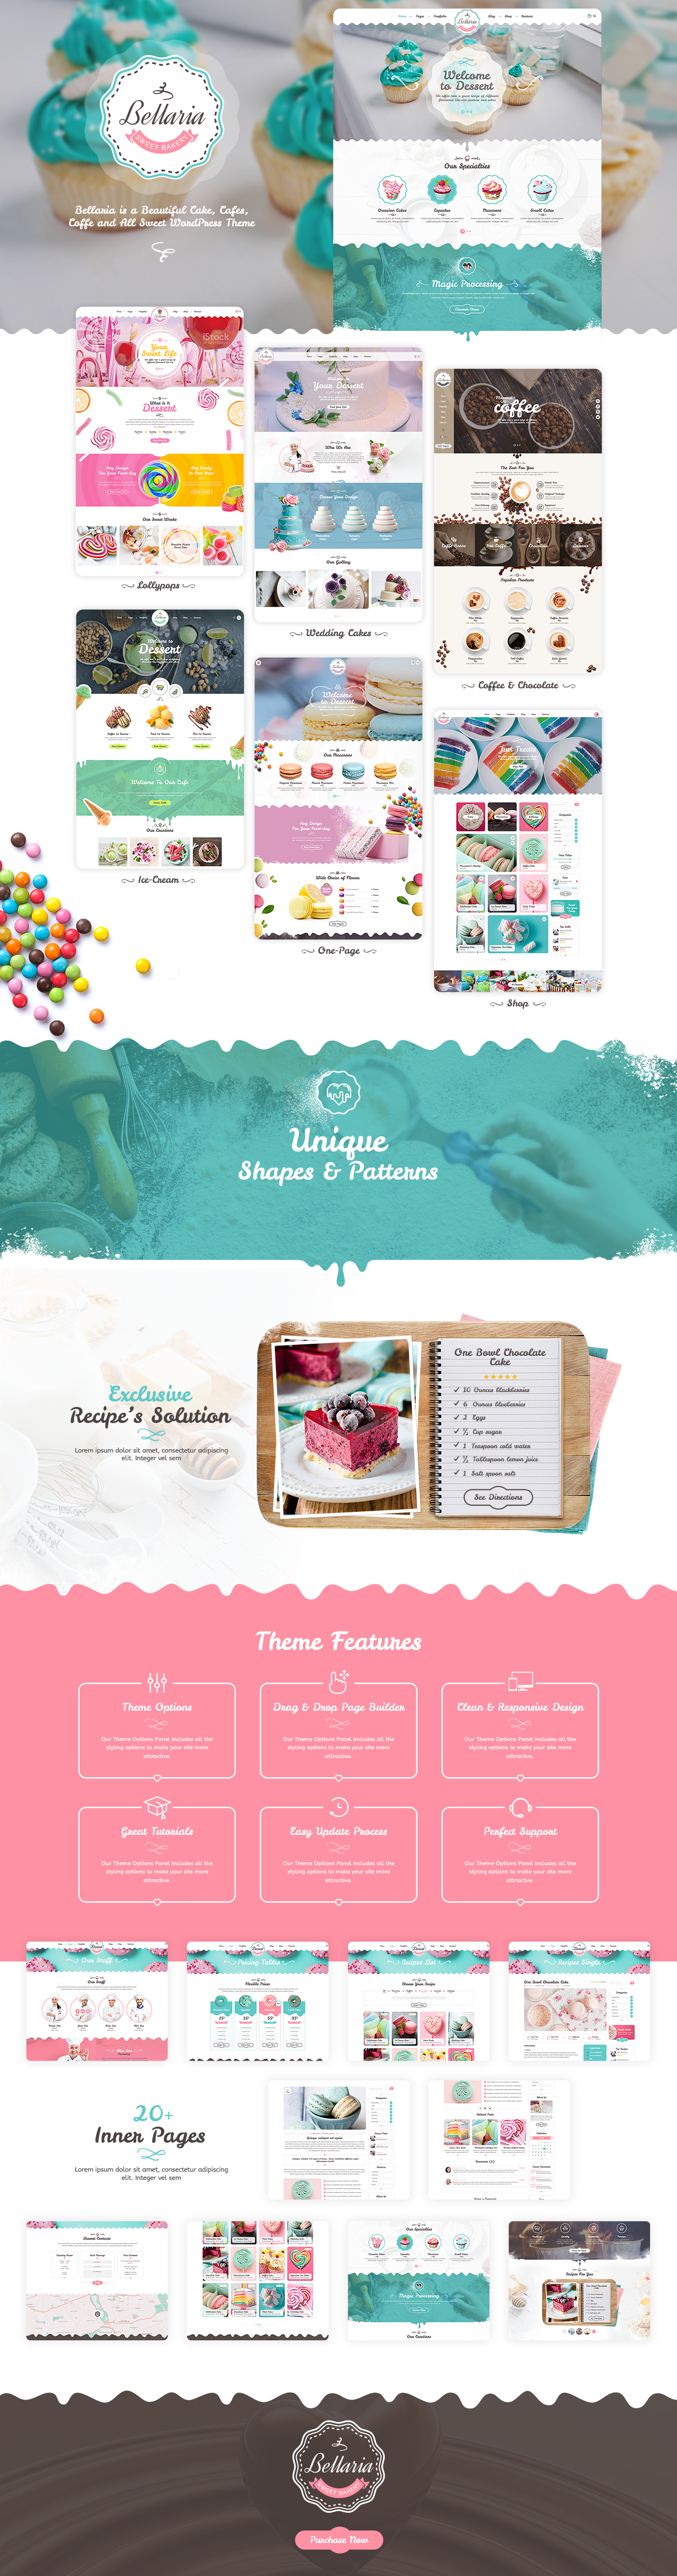 Bellaria - A Delicious Cakes and Bakery WordPress Theme